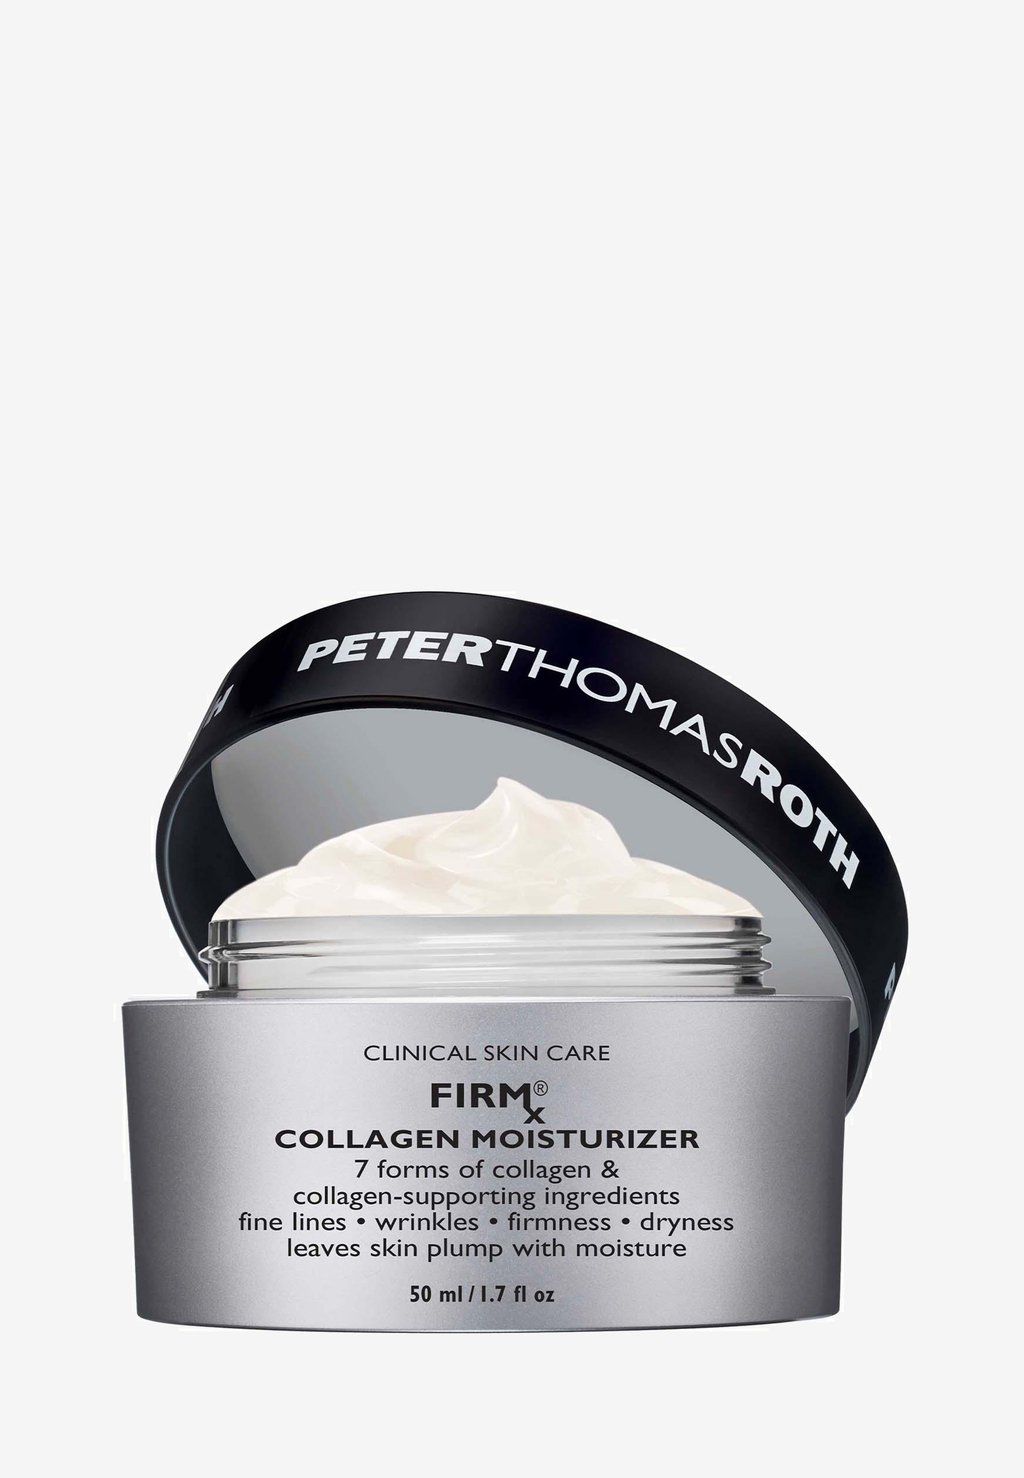 Дневной крем Firmx​ Collagen Moisturizer Peter Thomas Roth